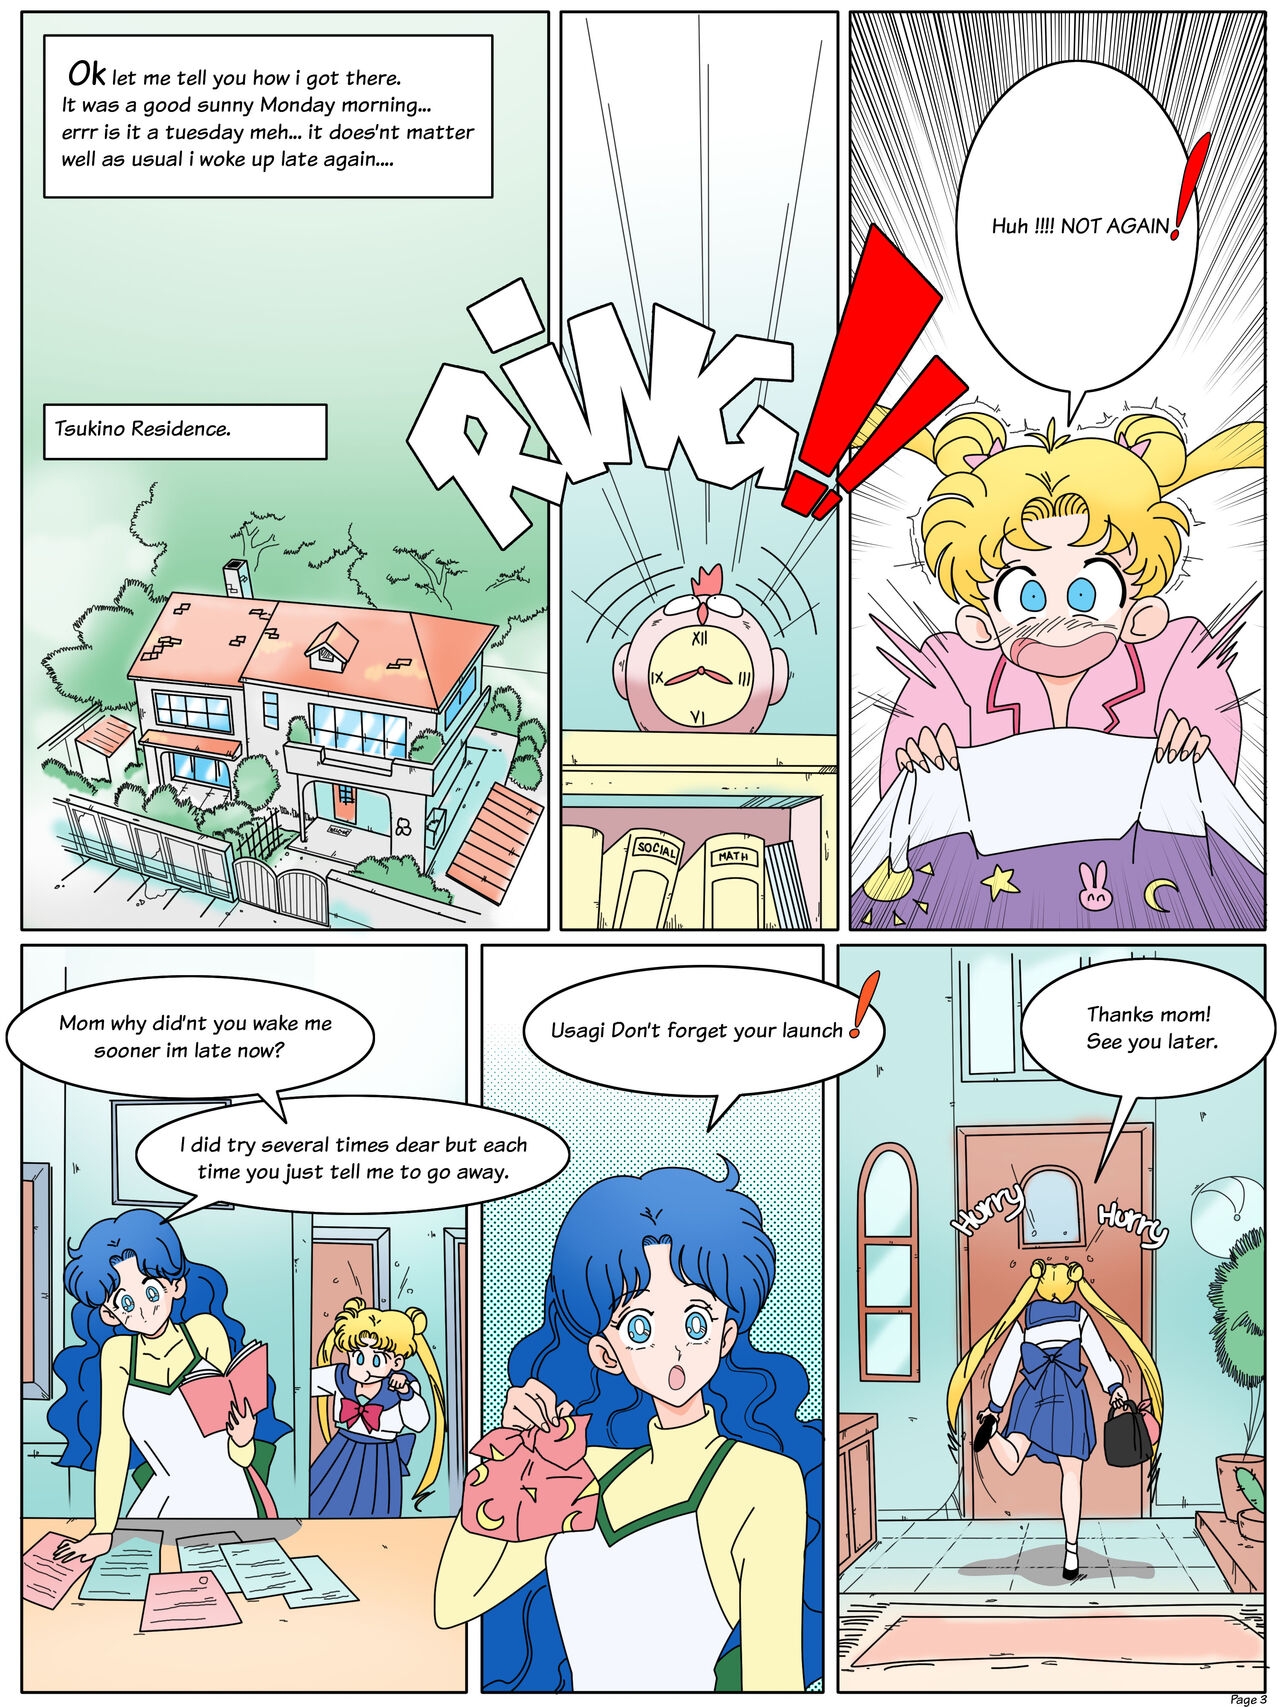 [Botbot] Sailor Moon Isekai Monogatari [Ongoing] 4